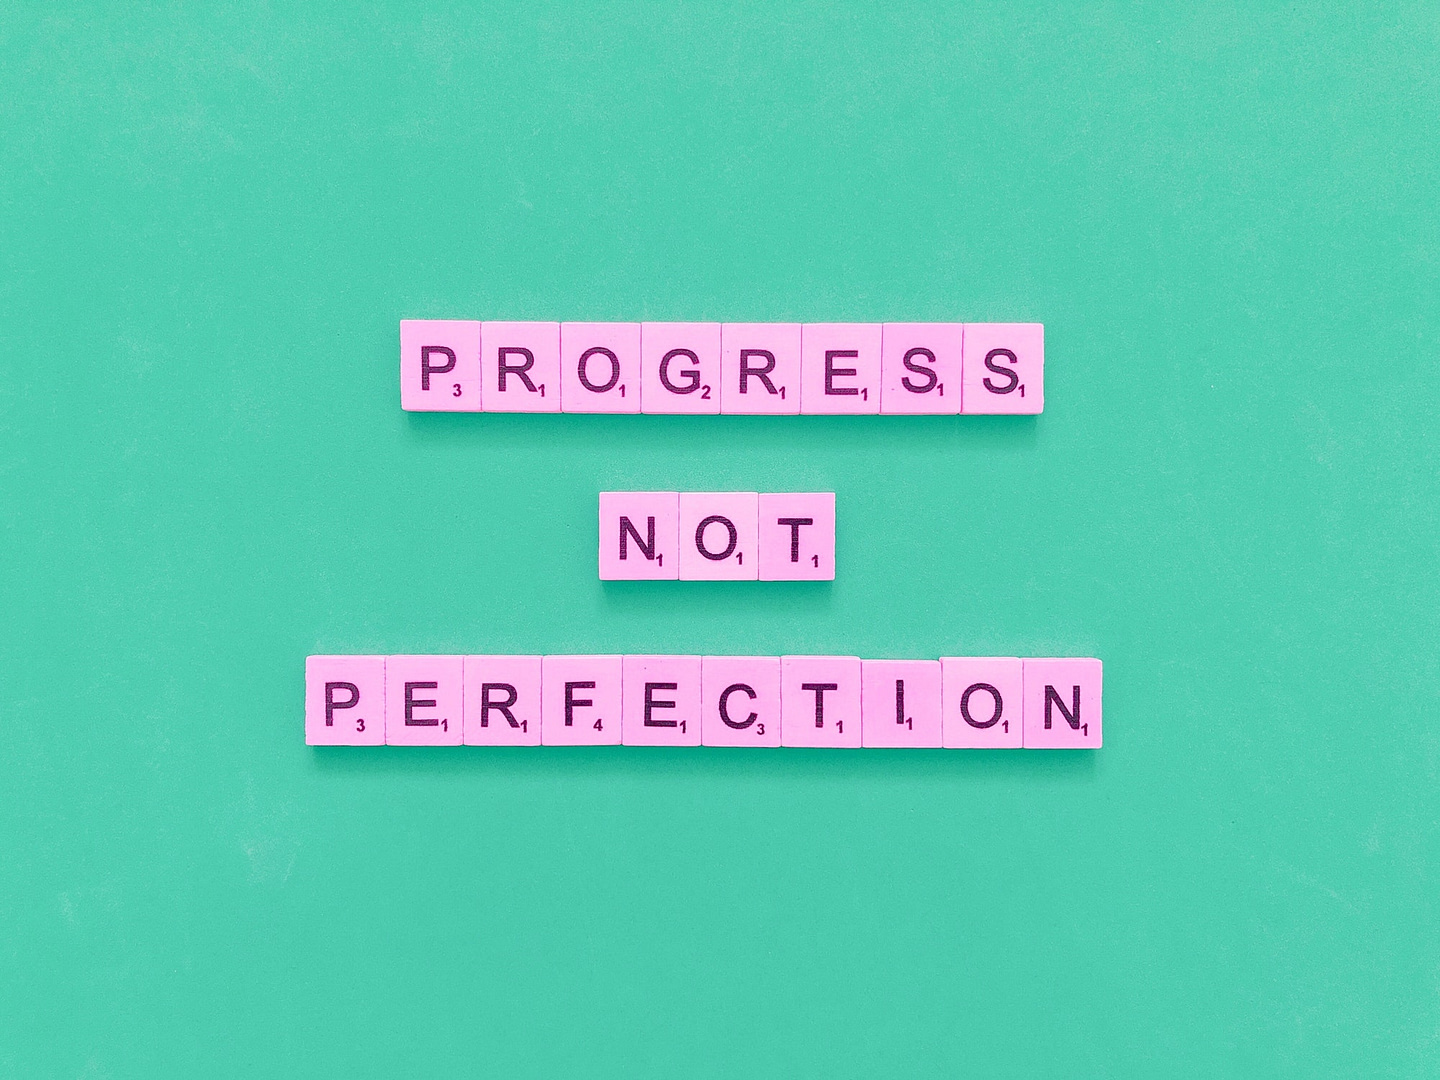 Progress not perfection